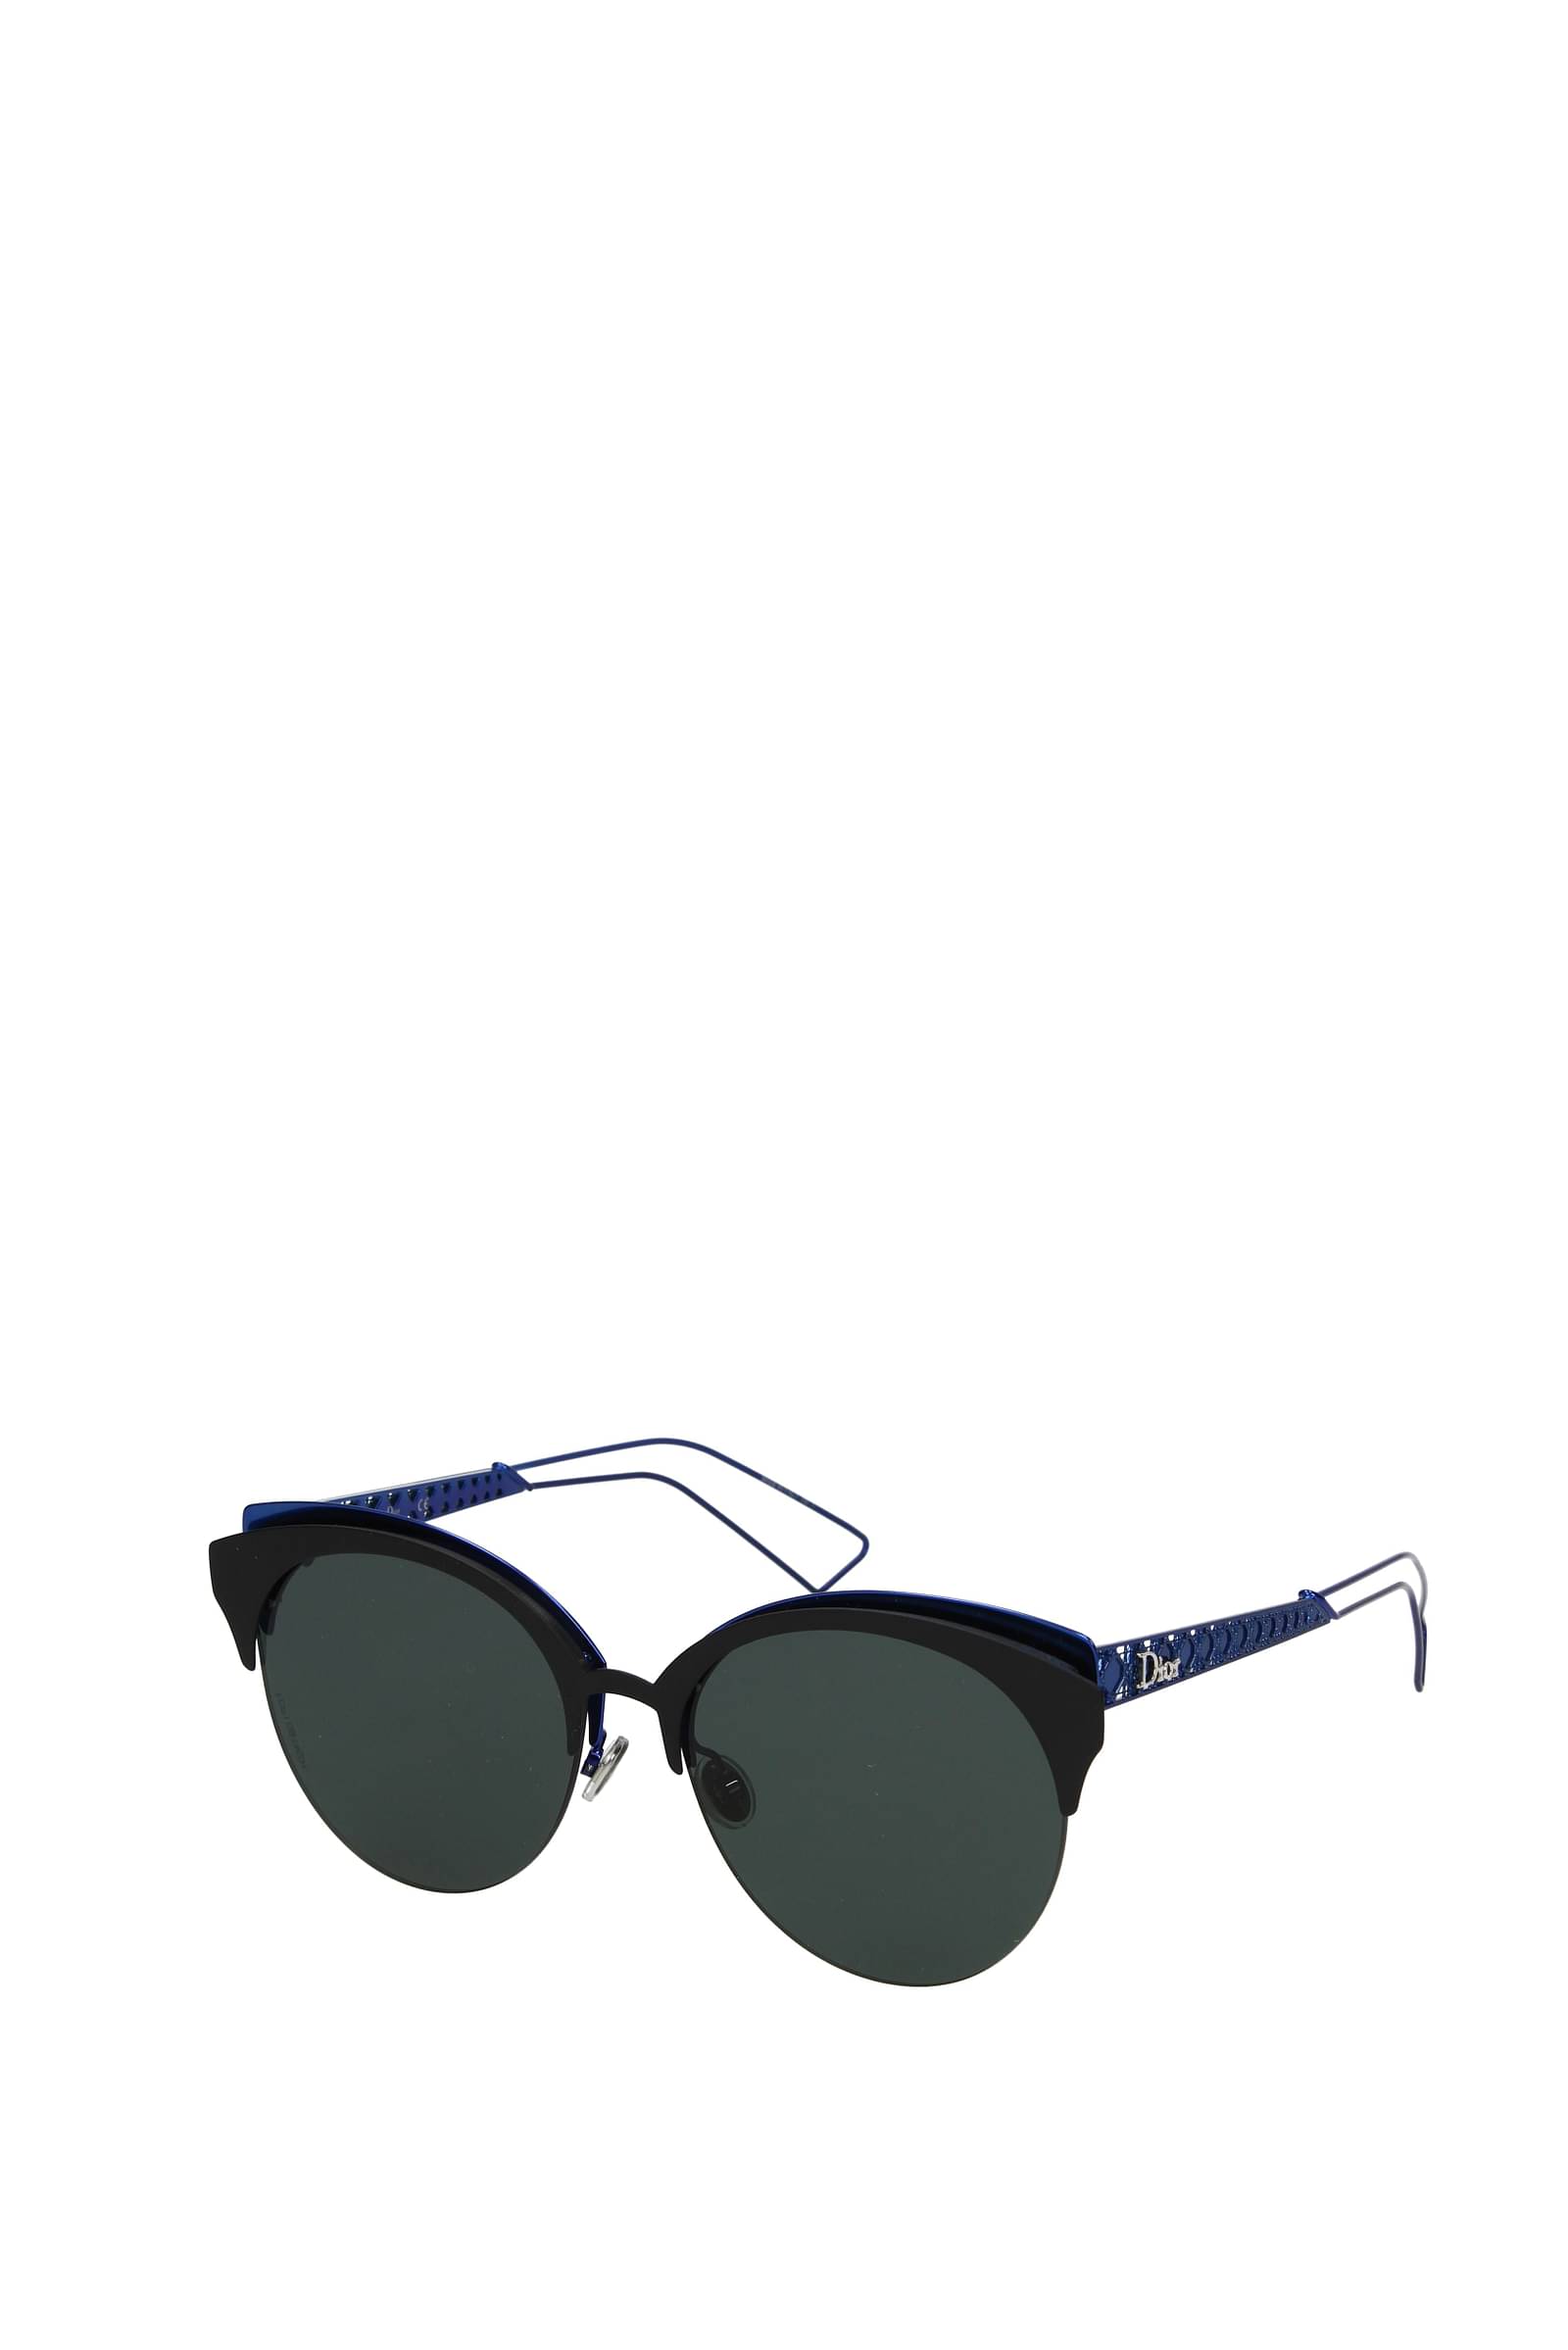 Dior Womens Sunglasses for Sale  eBay